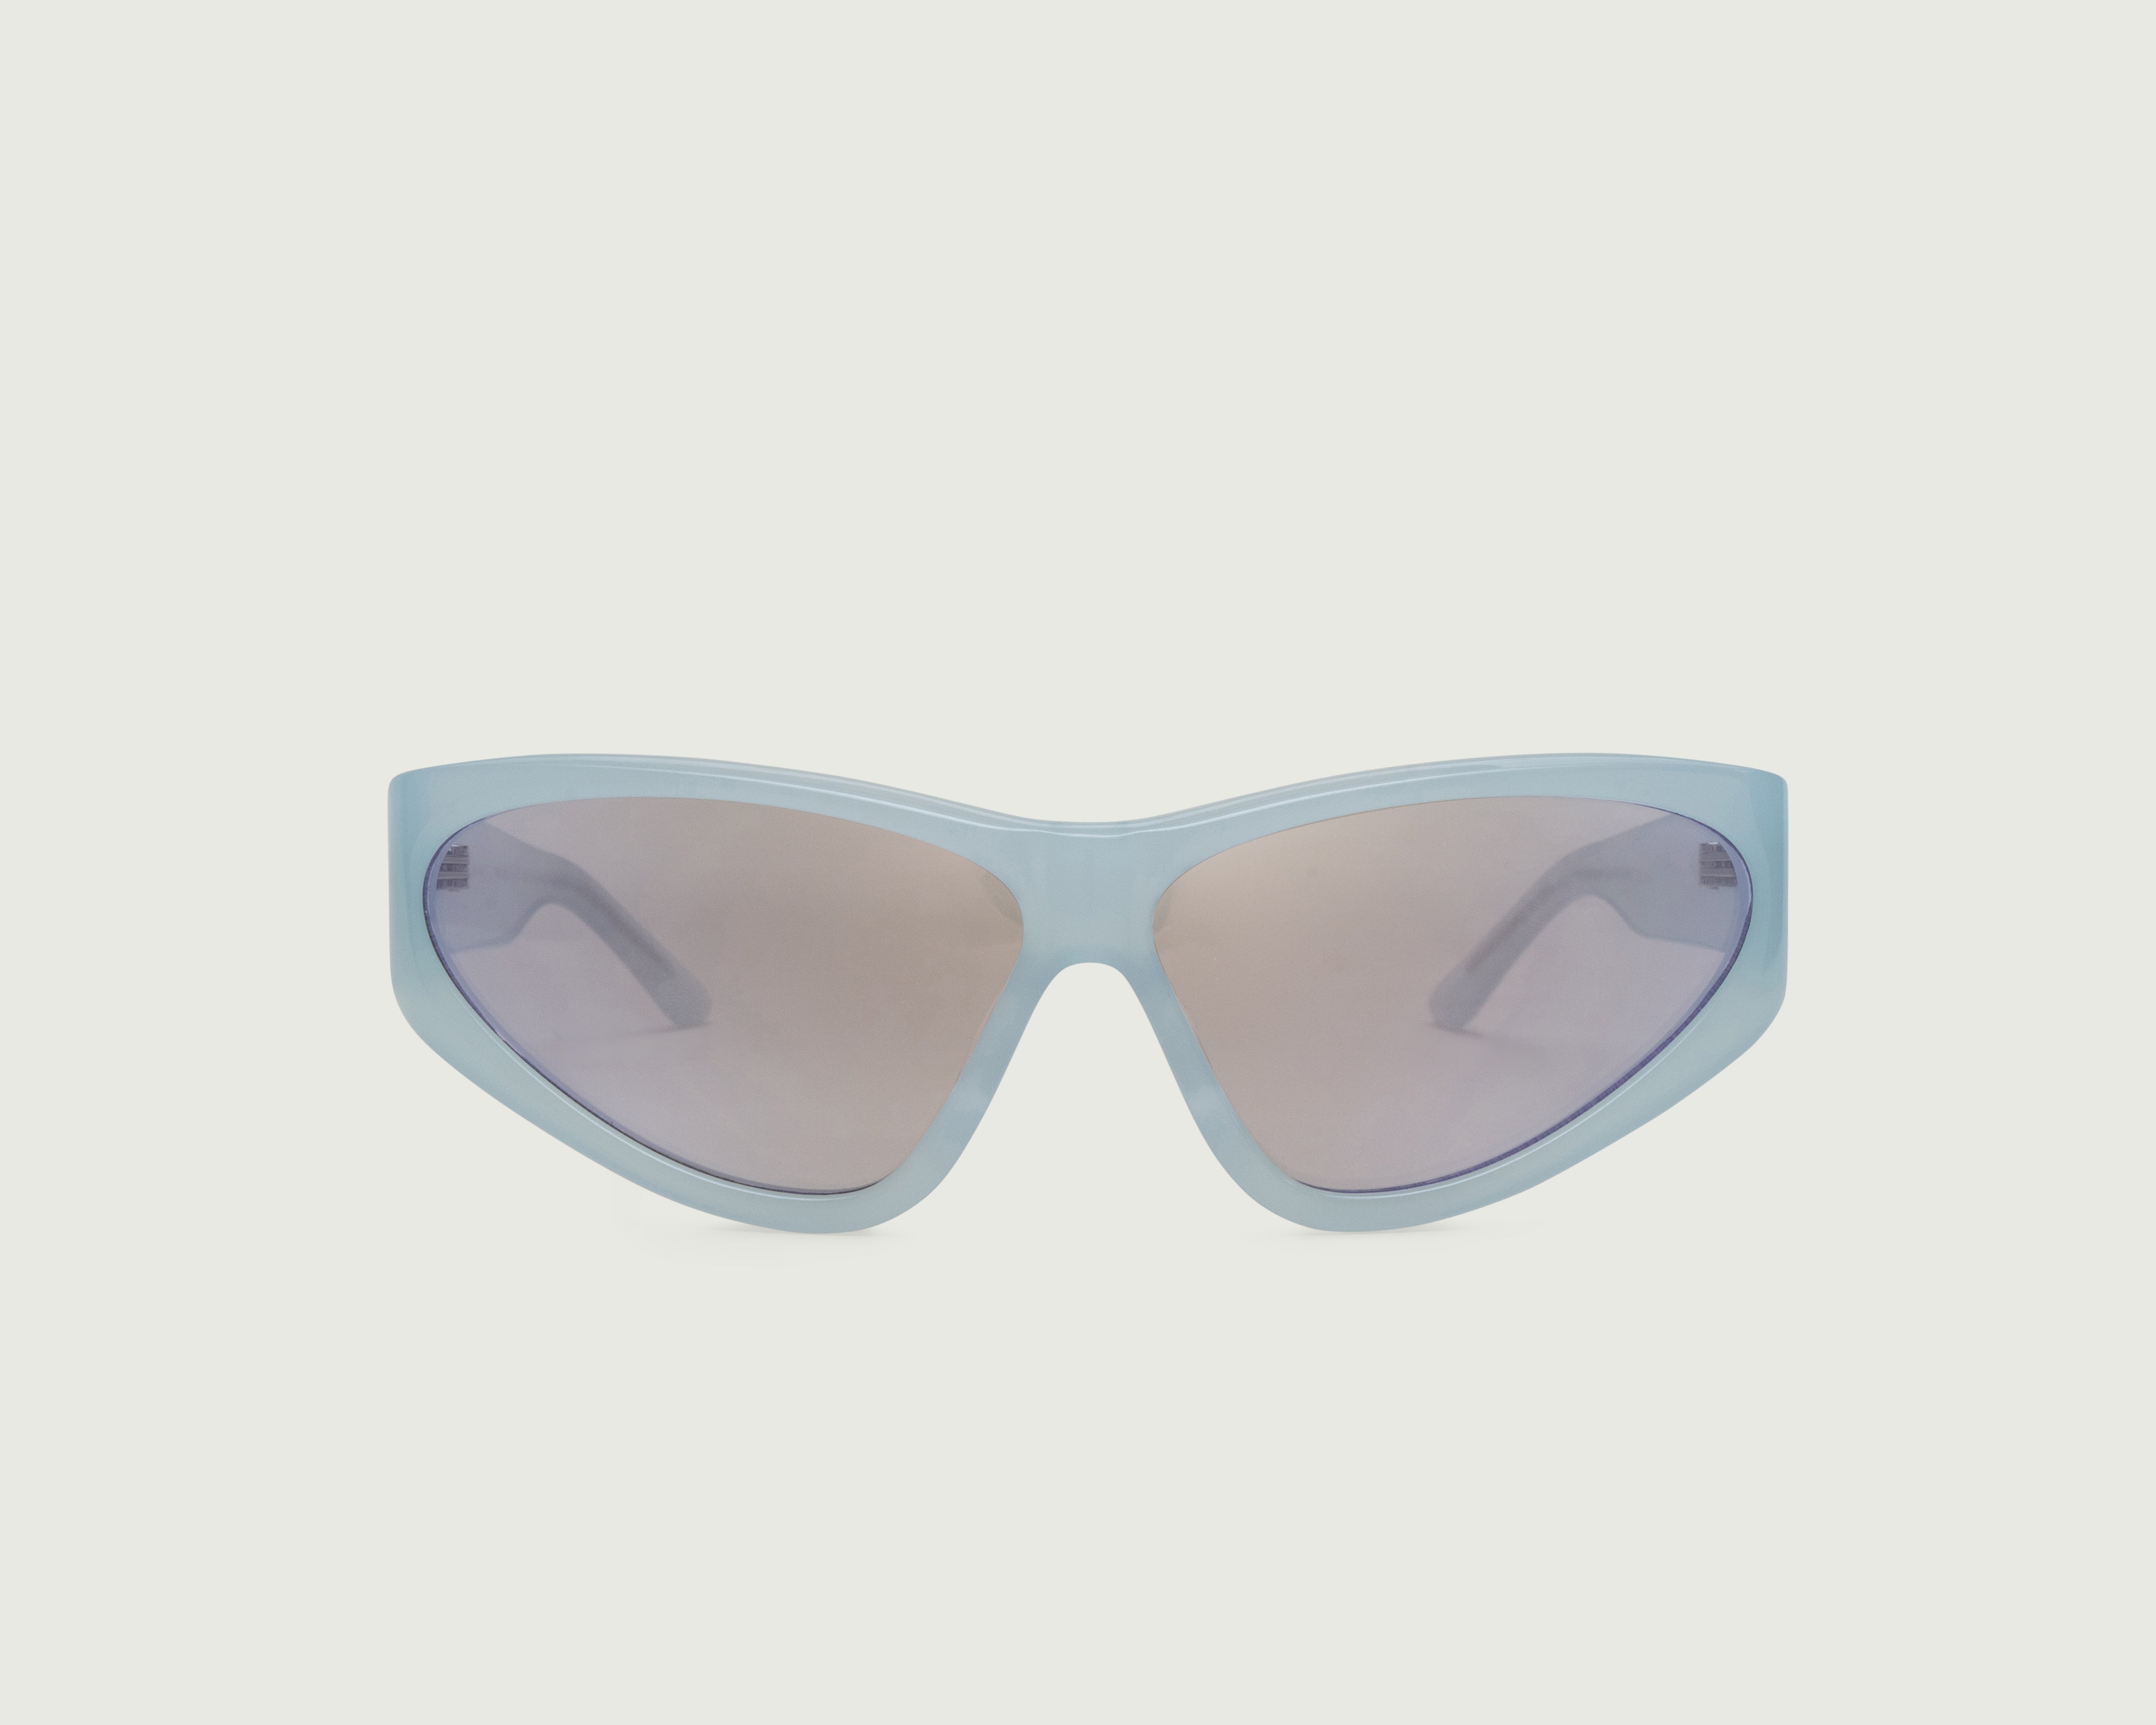  Opal::Zoe Sunglasses cateye blue acetate front